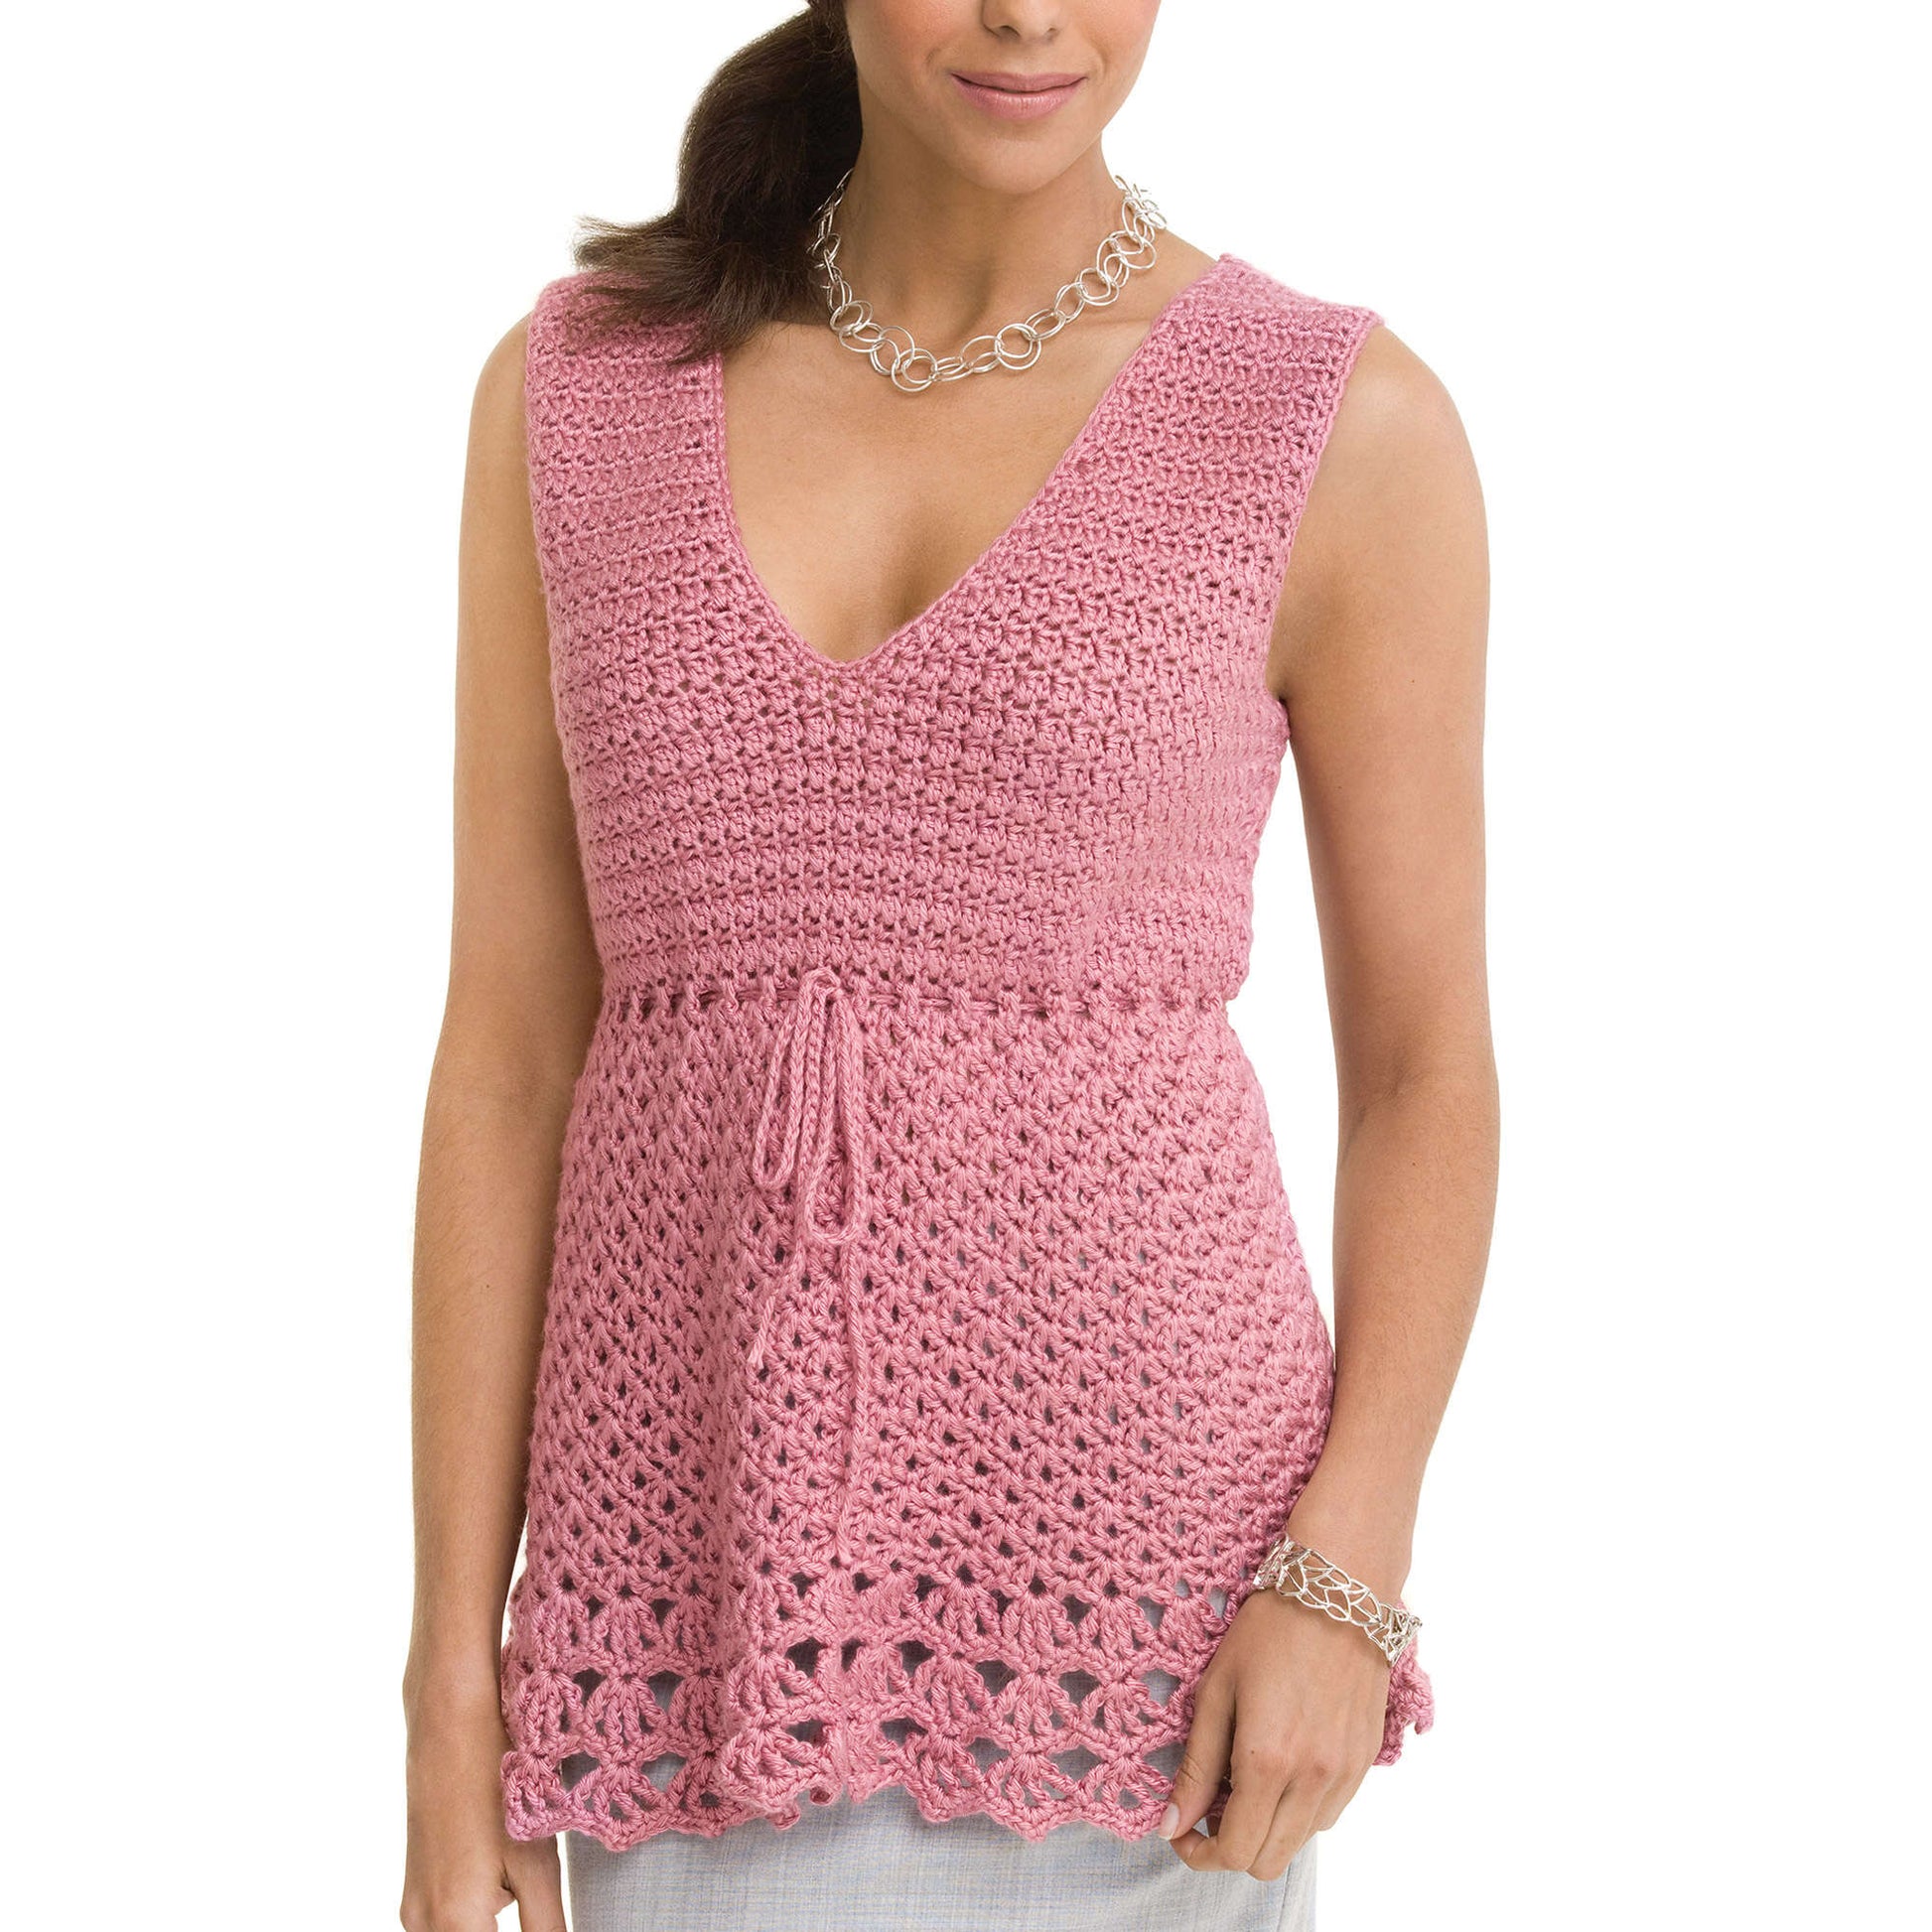 Free Caron Lacy Cami Crochet Pattern